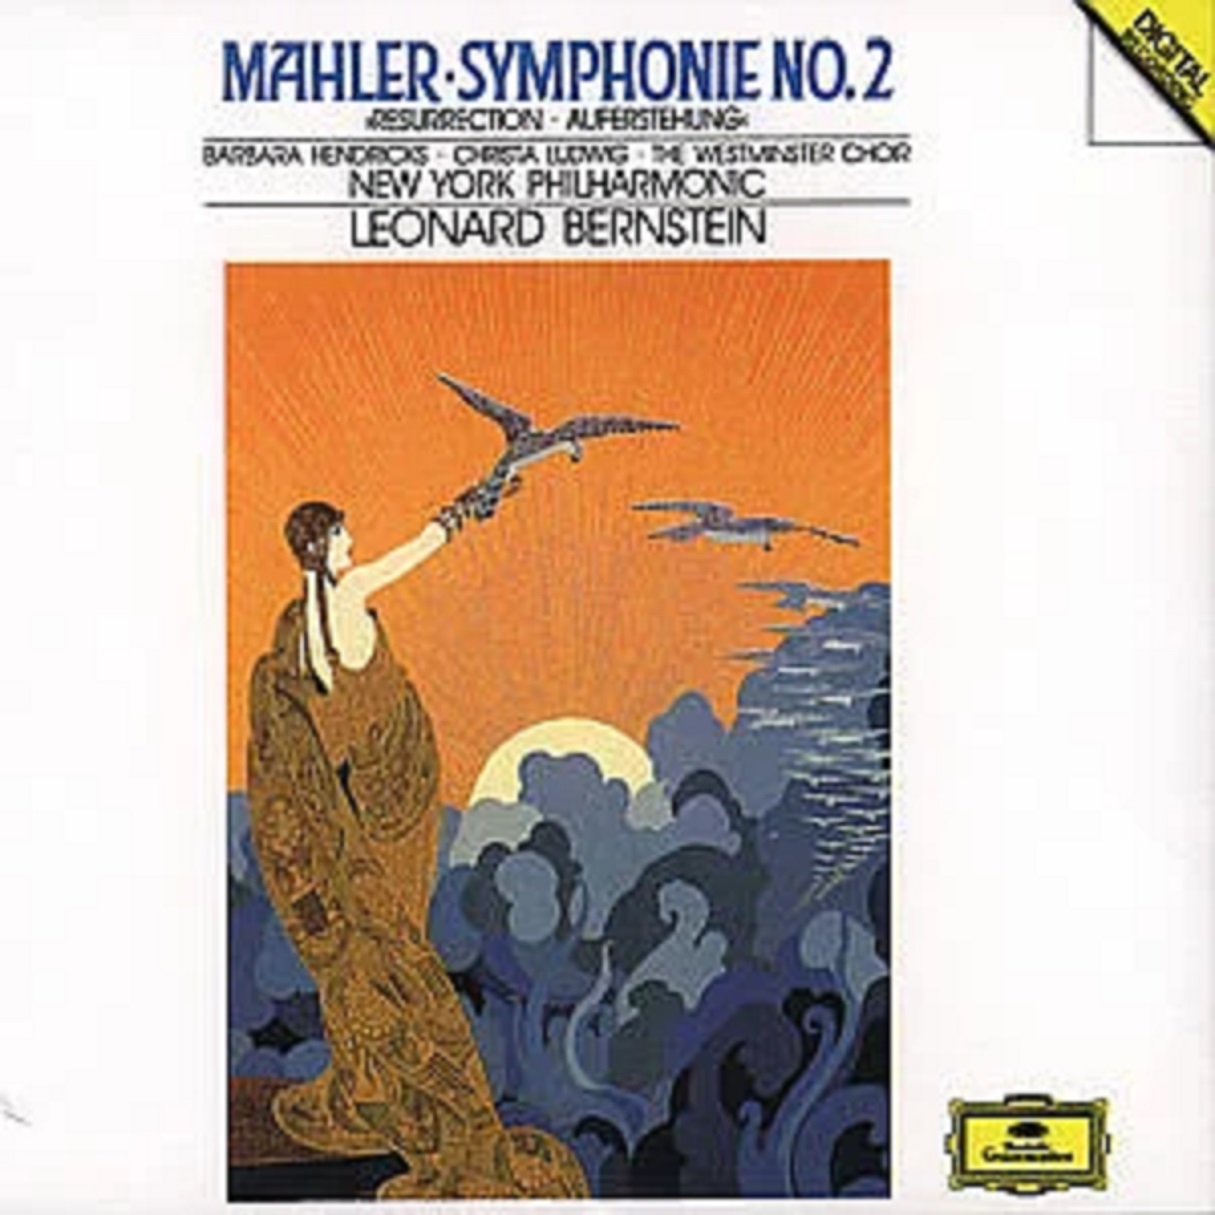 Mahler / Symphony No. 2 | Nypo / Bernstein